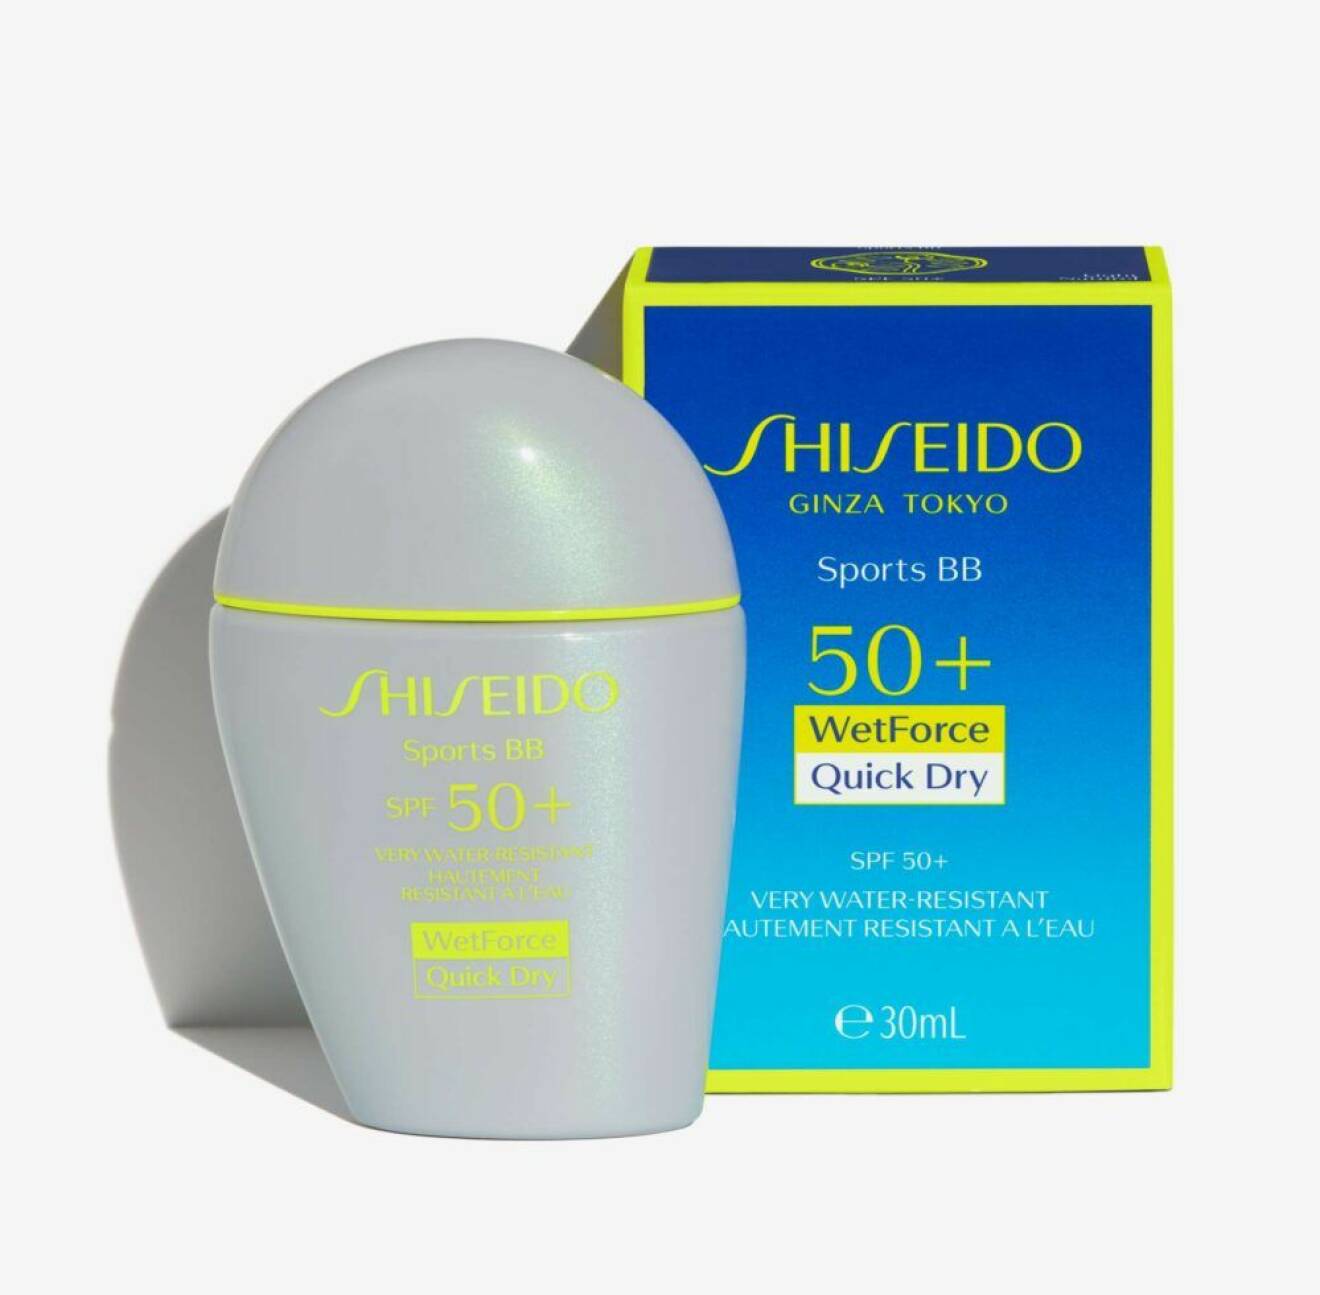 Shiseido Sports BB spf 50+